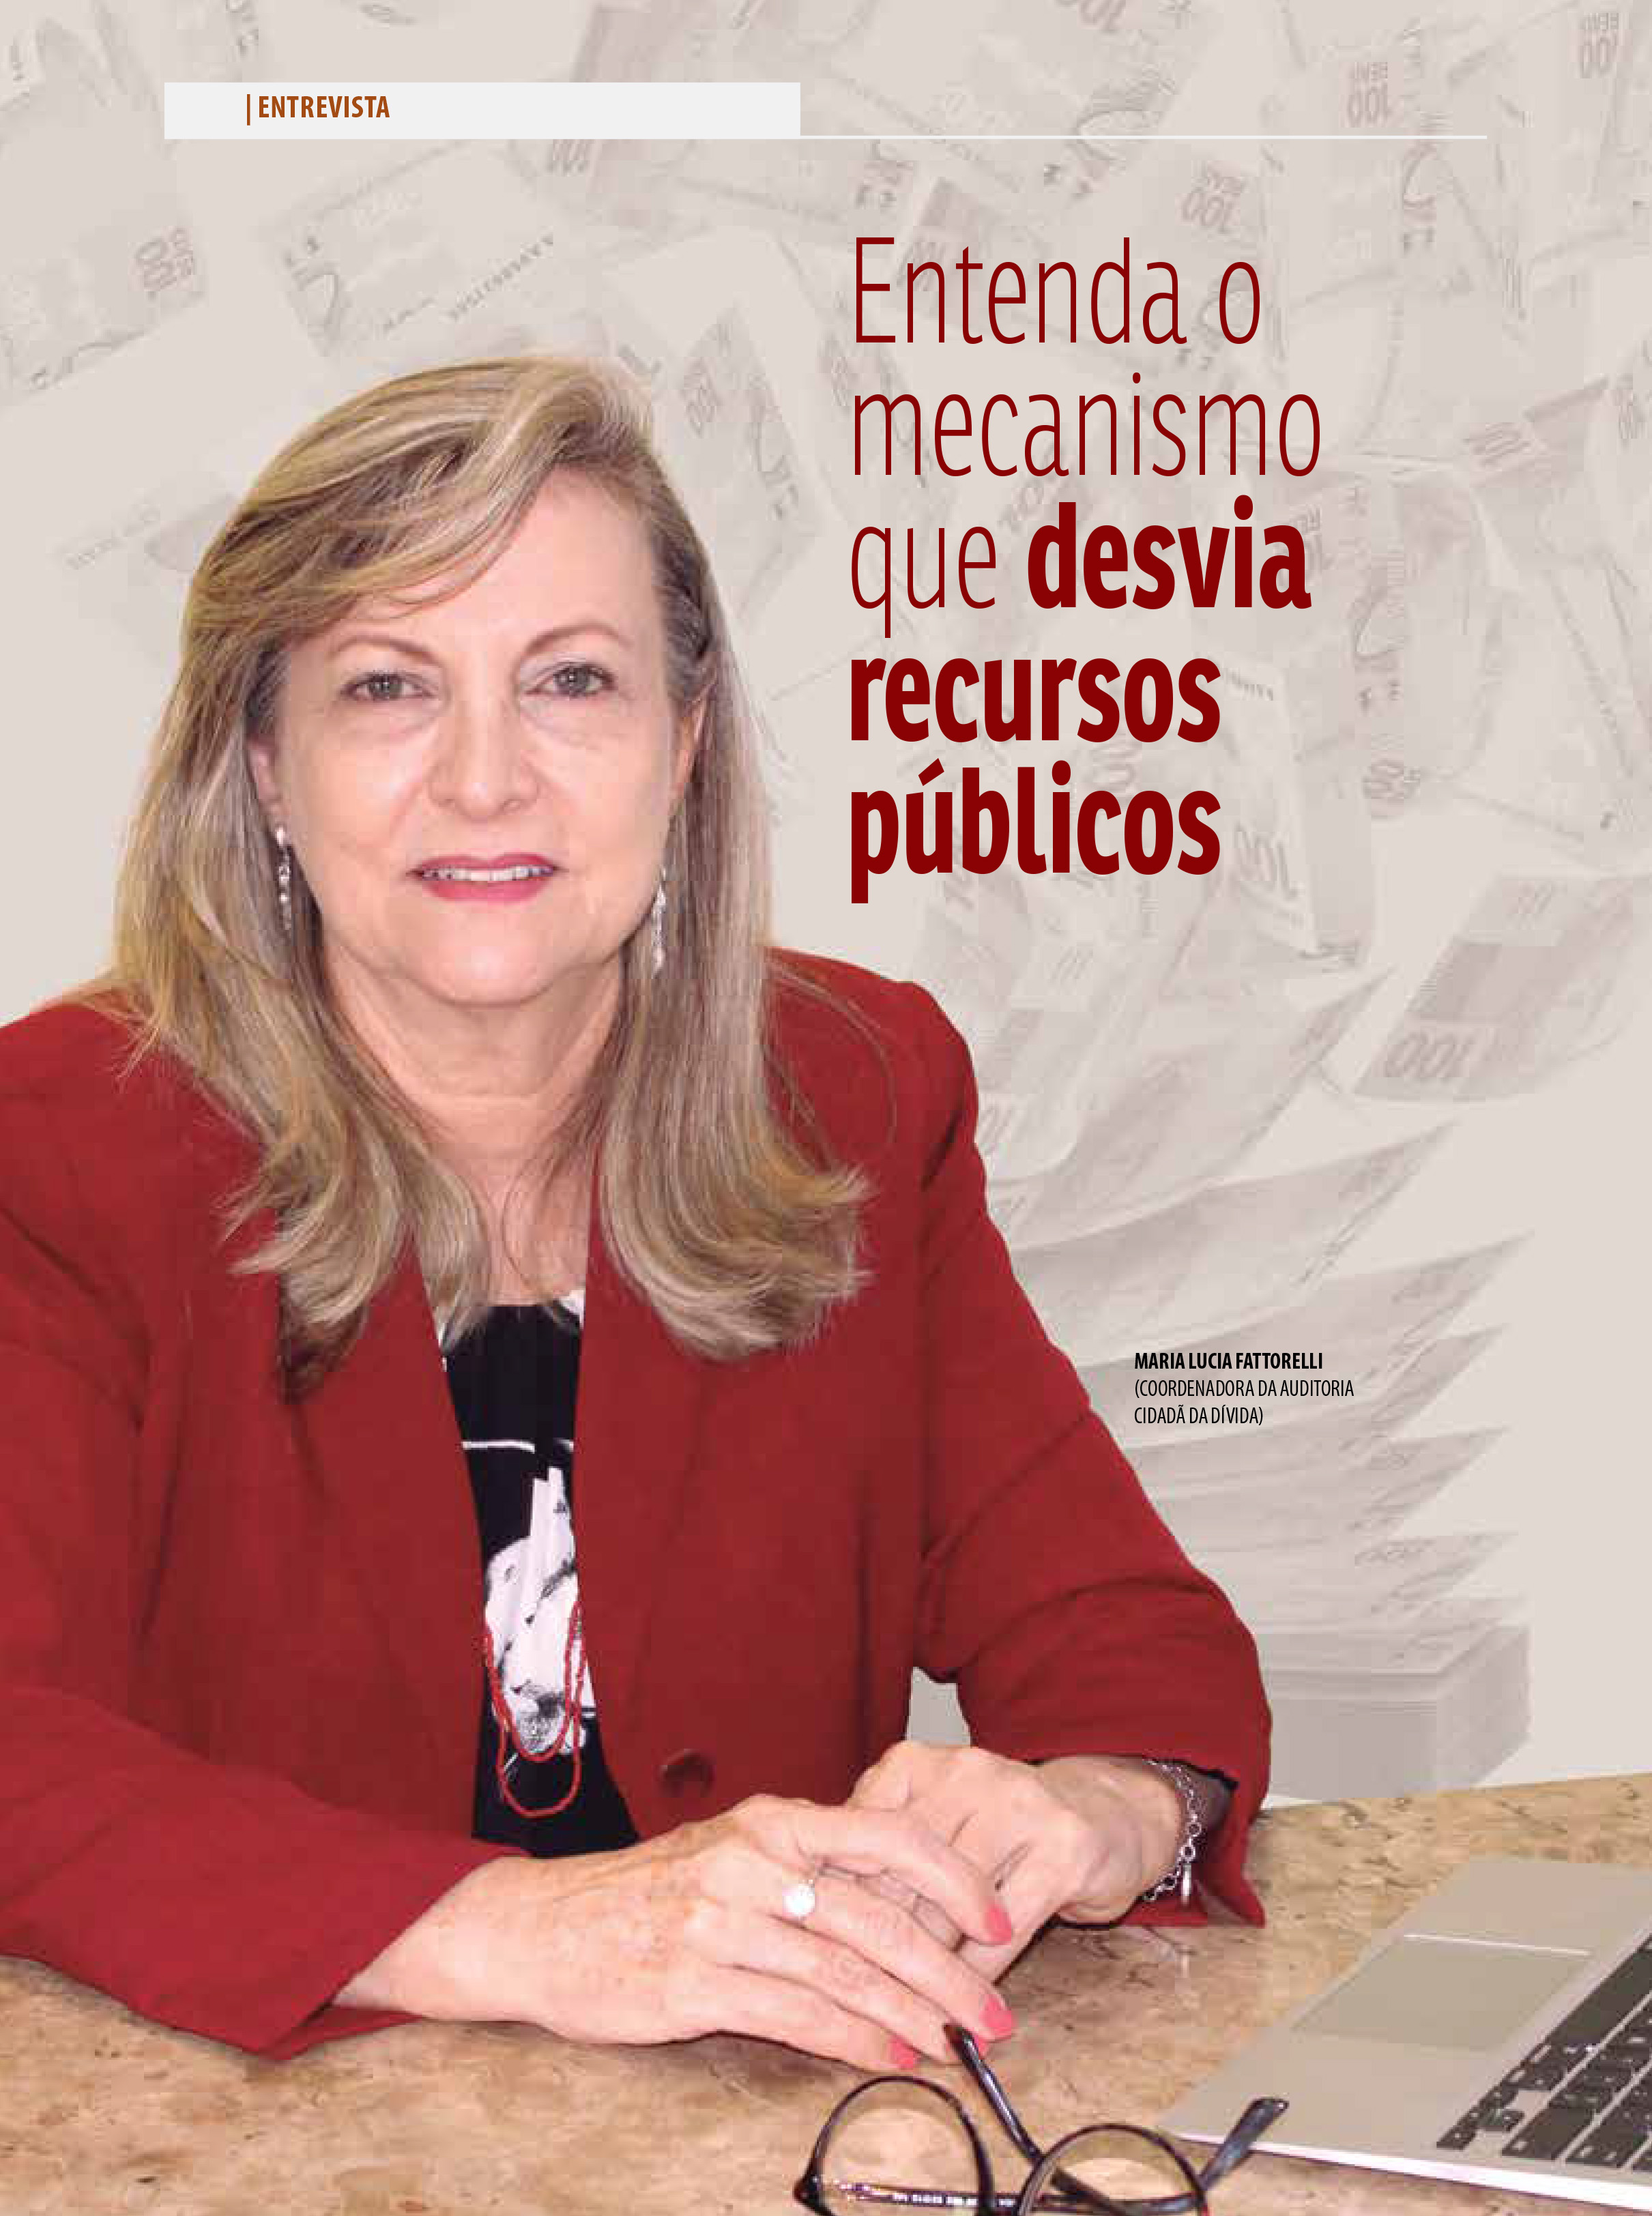 Revista da Anfip: “Entenda o mecanismo que desvia recursos públicos”, entrevista com Maria Lucia Fattorelli